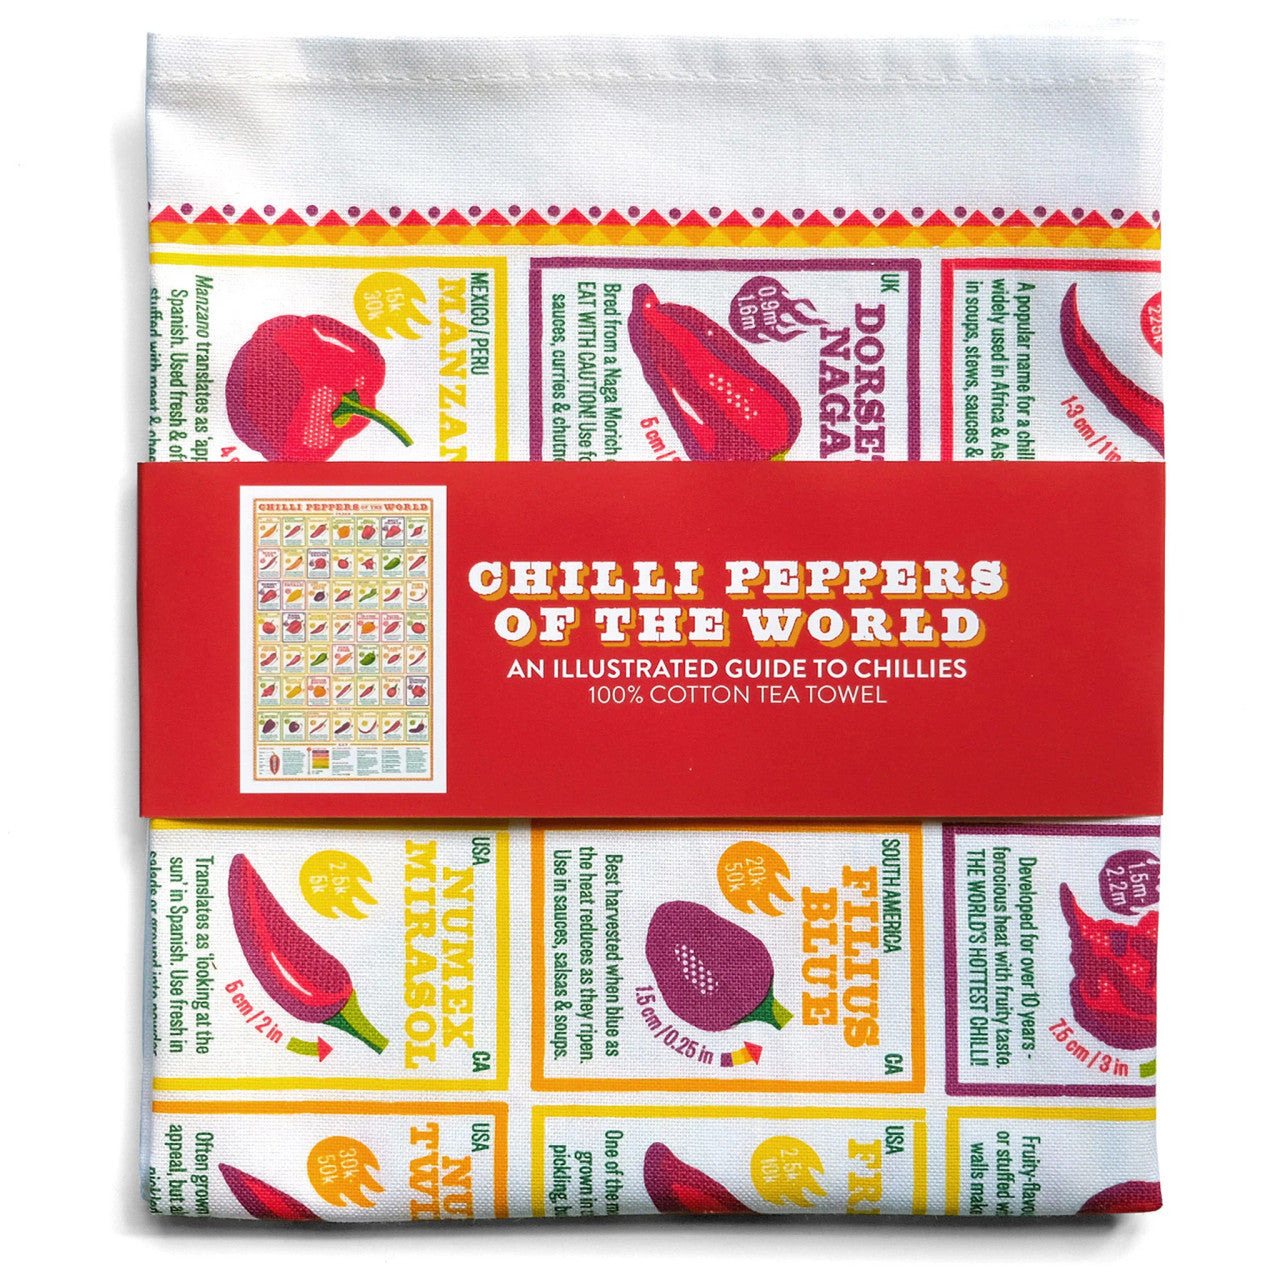 Chilli Peppers of the World Tea Towel by Stuart Gardiner.